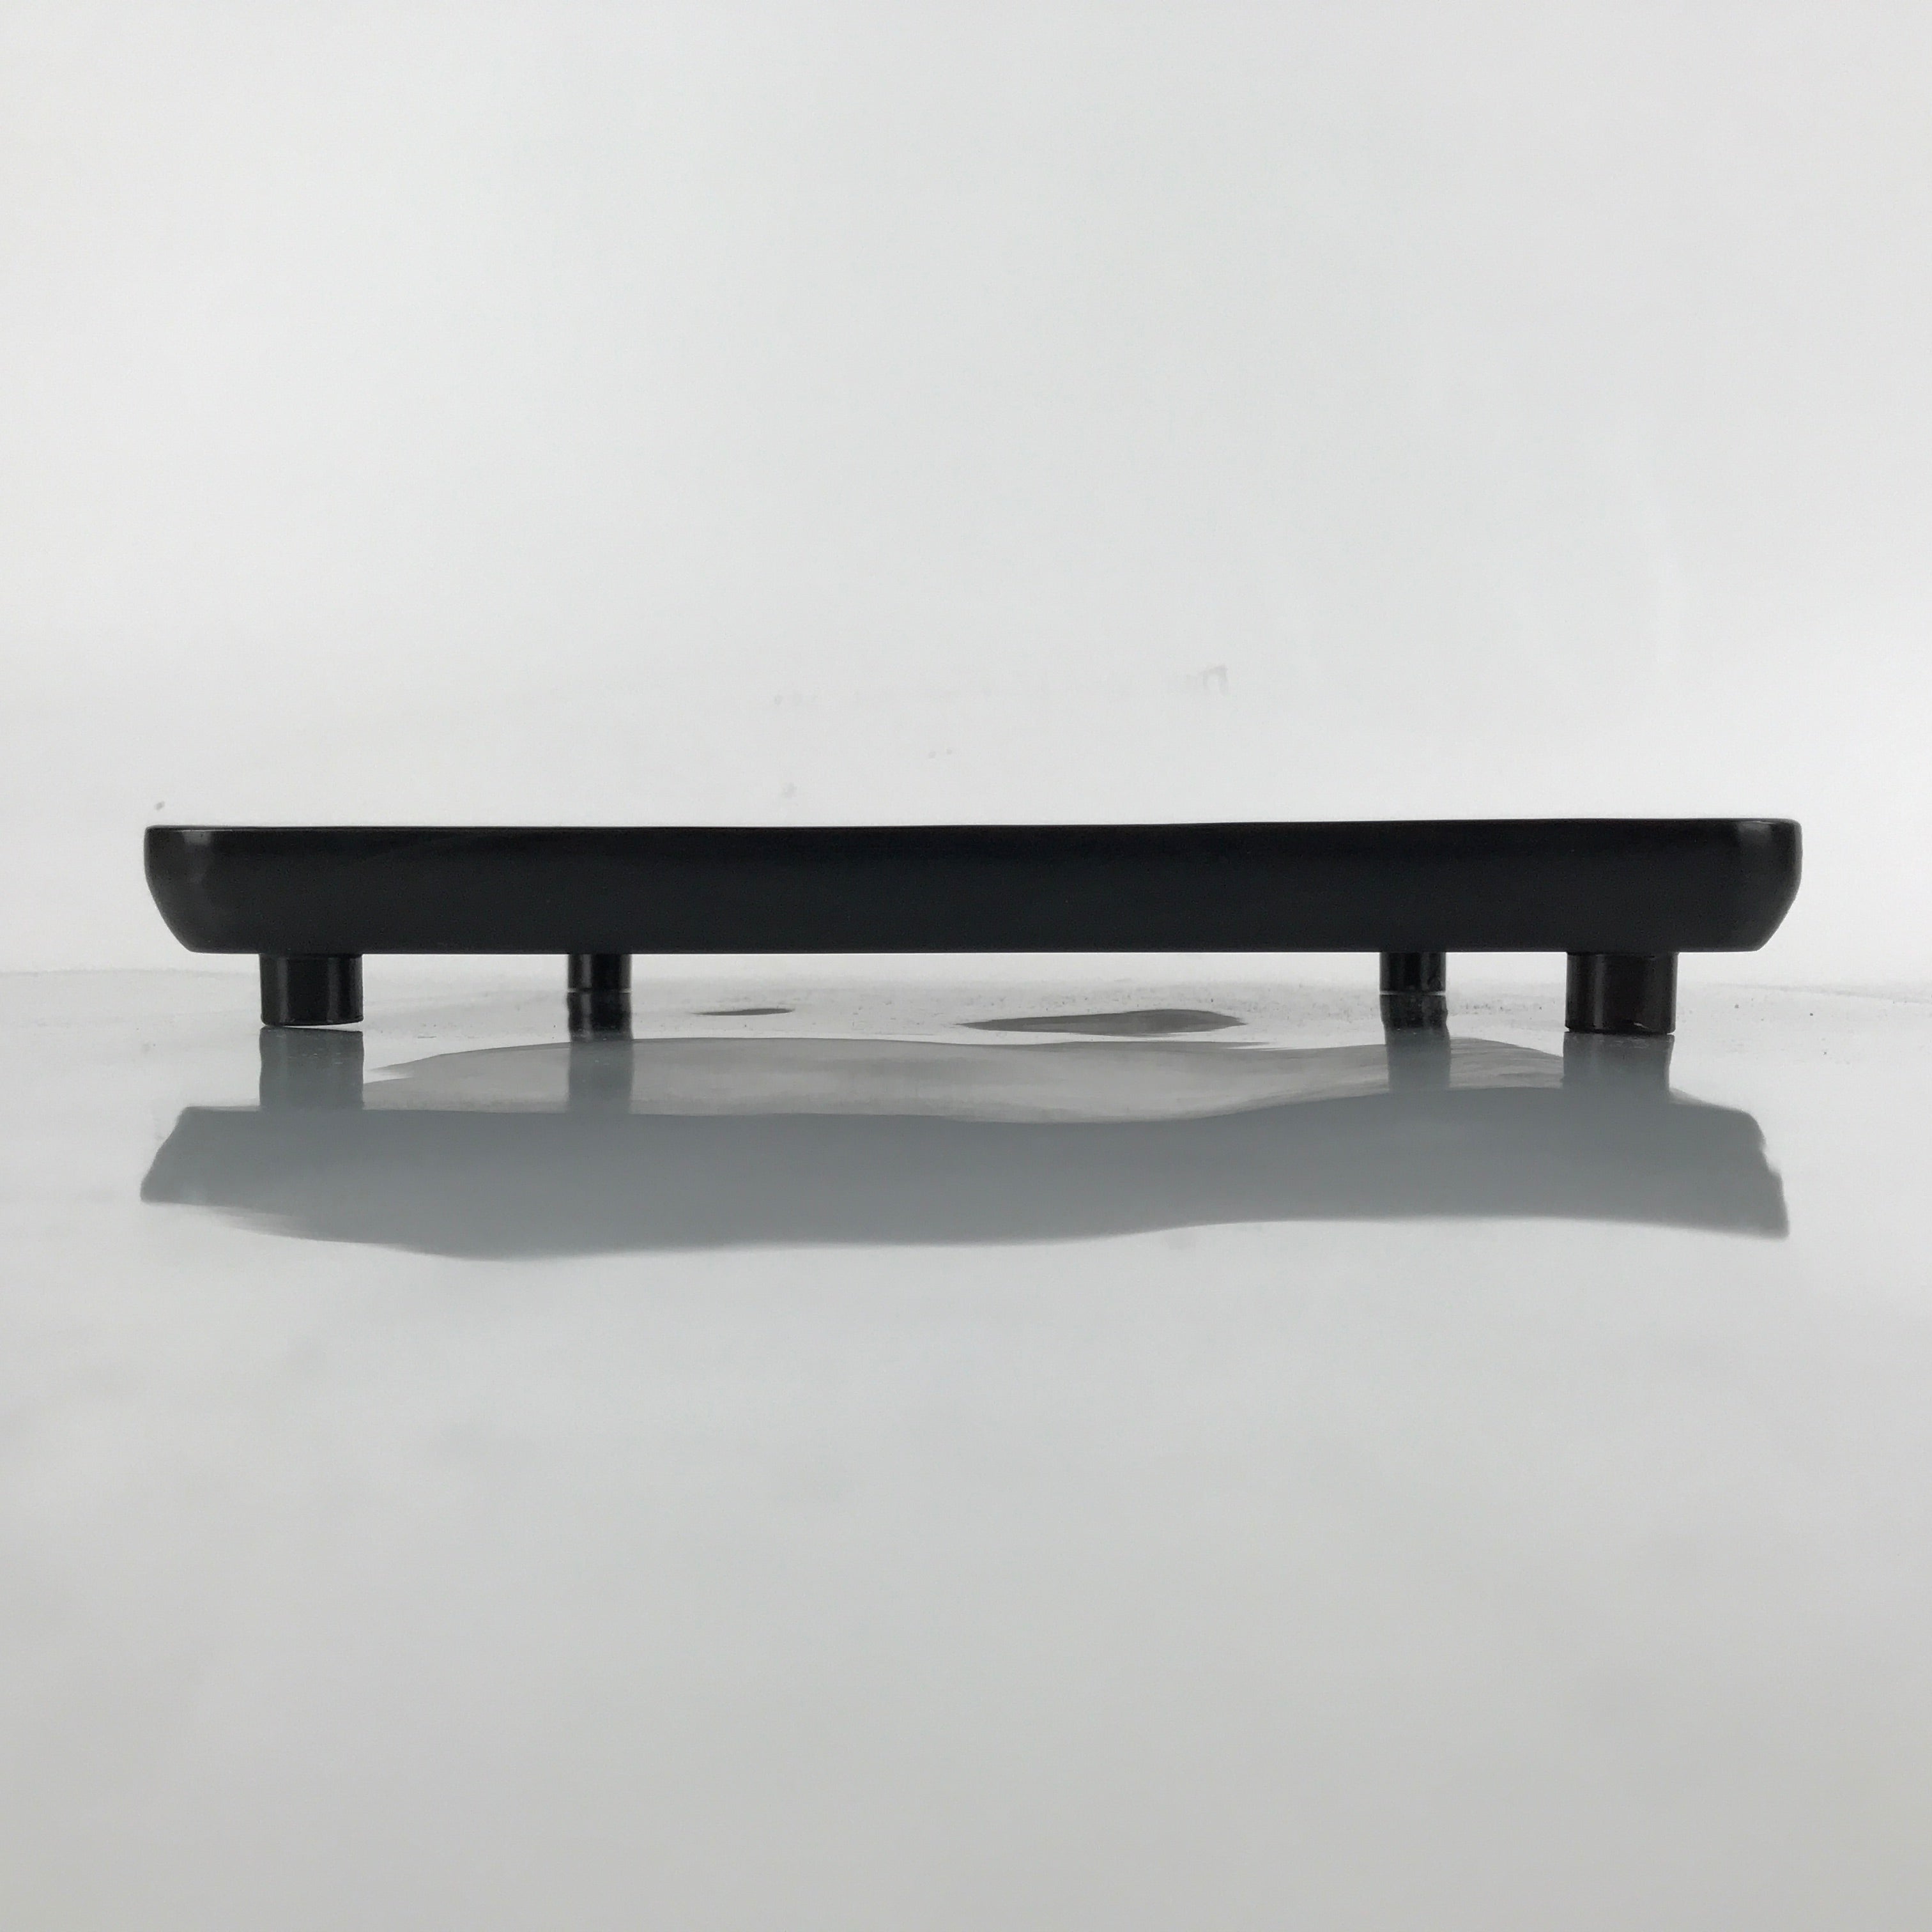 Japanese Wooden Lacquered Legged Table Vtg Ozen Tray Black Nurimono L252